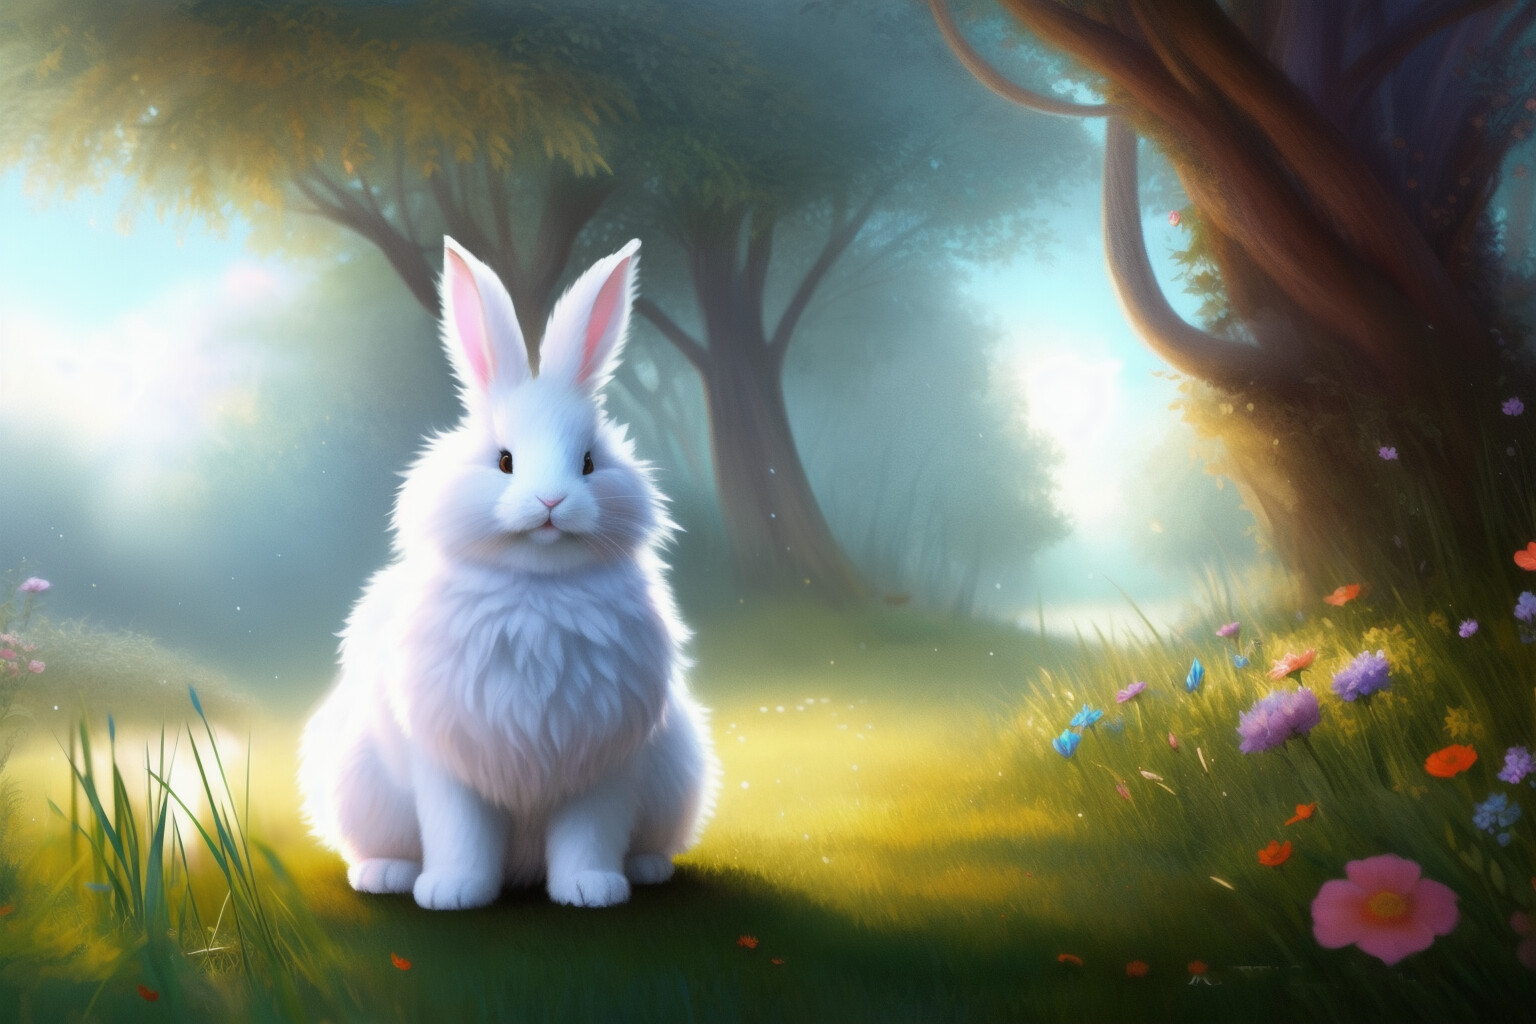 ArtStation - Illustrations Inspired by the Rabbit